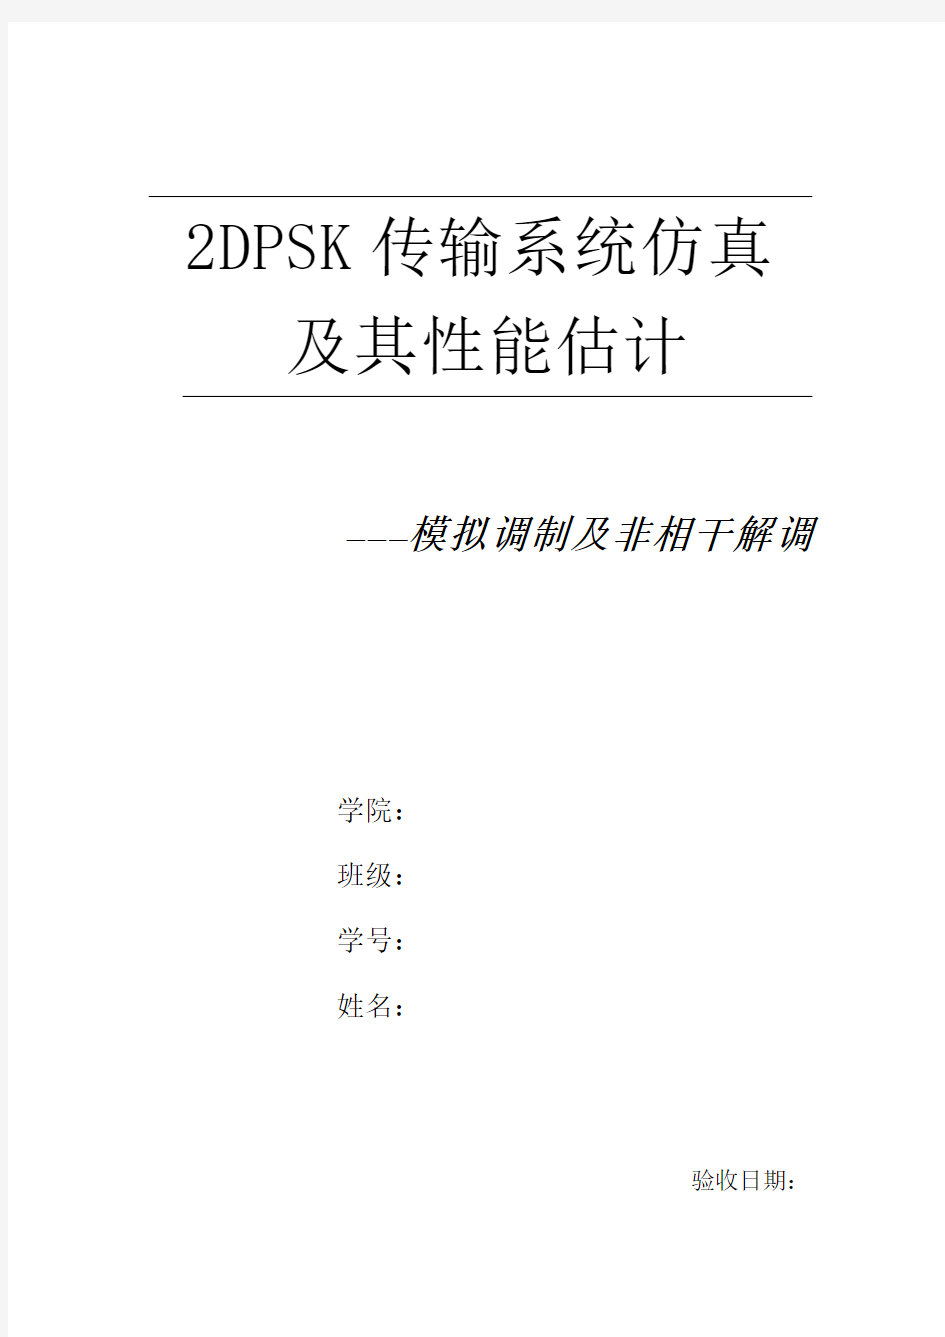 2DPSK(systemview)通信系统仿真实验报告